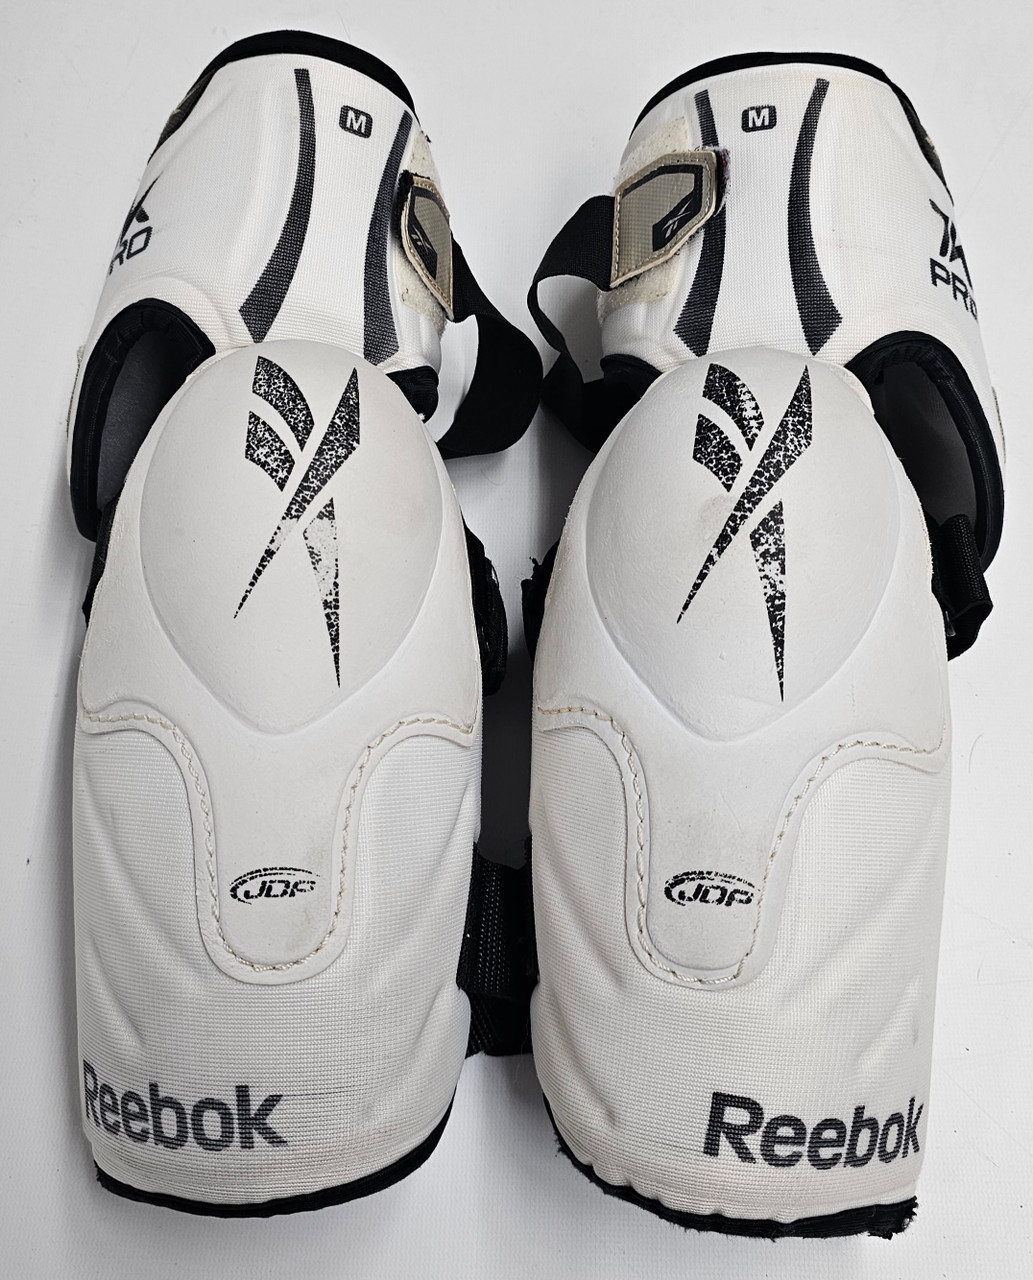 Reebok 7K Pro Stock Sr Elbow Pads Medium Used (2) - DK's Hockey Shop